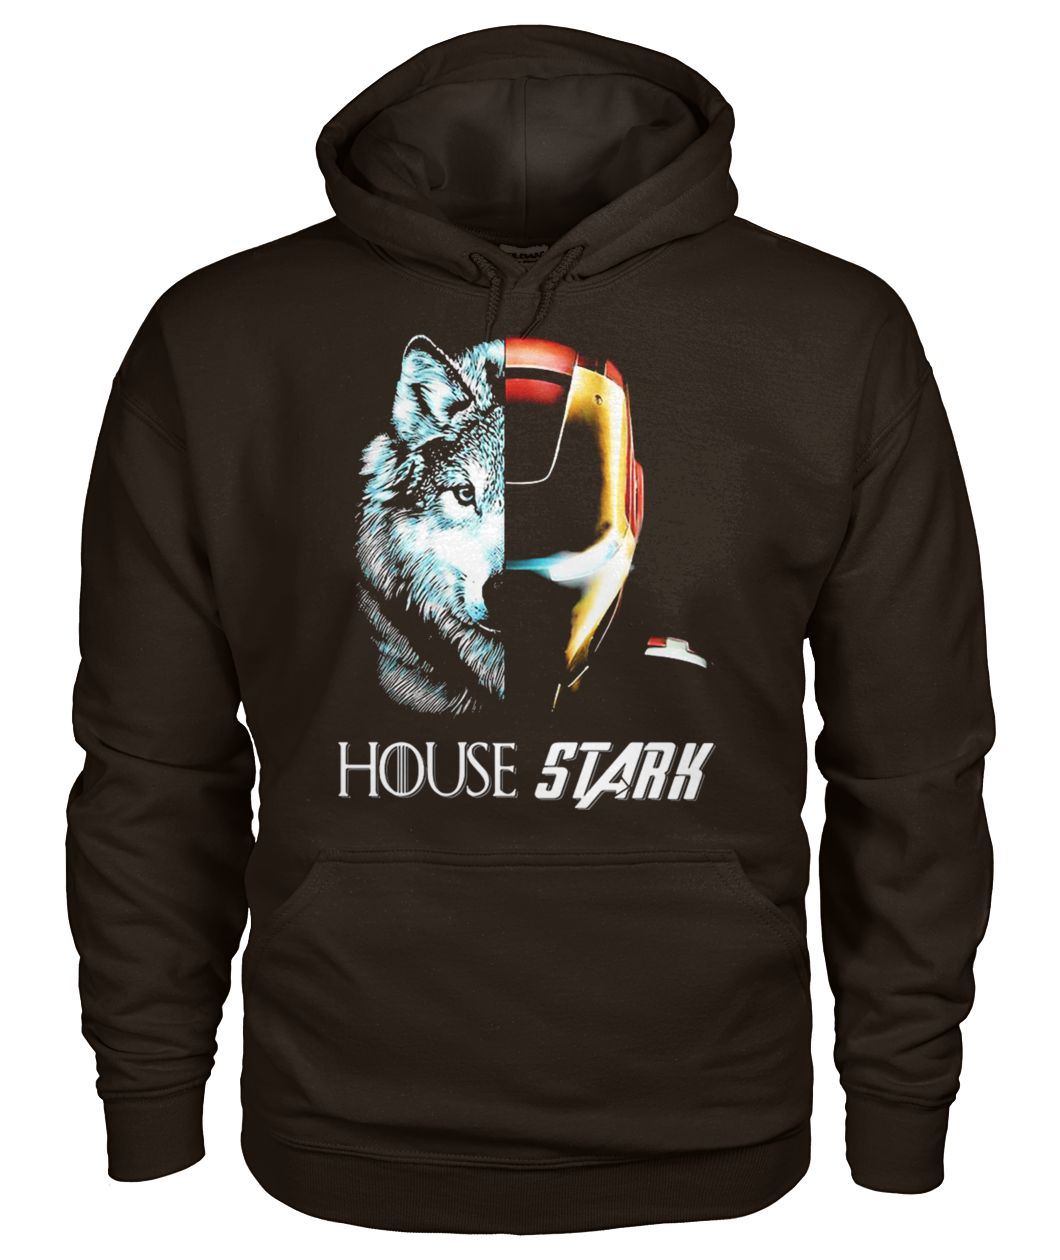 Game of thrones and avengers direwolf iron man mash up gildan hoodie